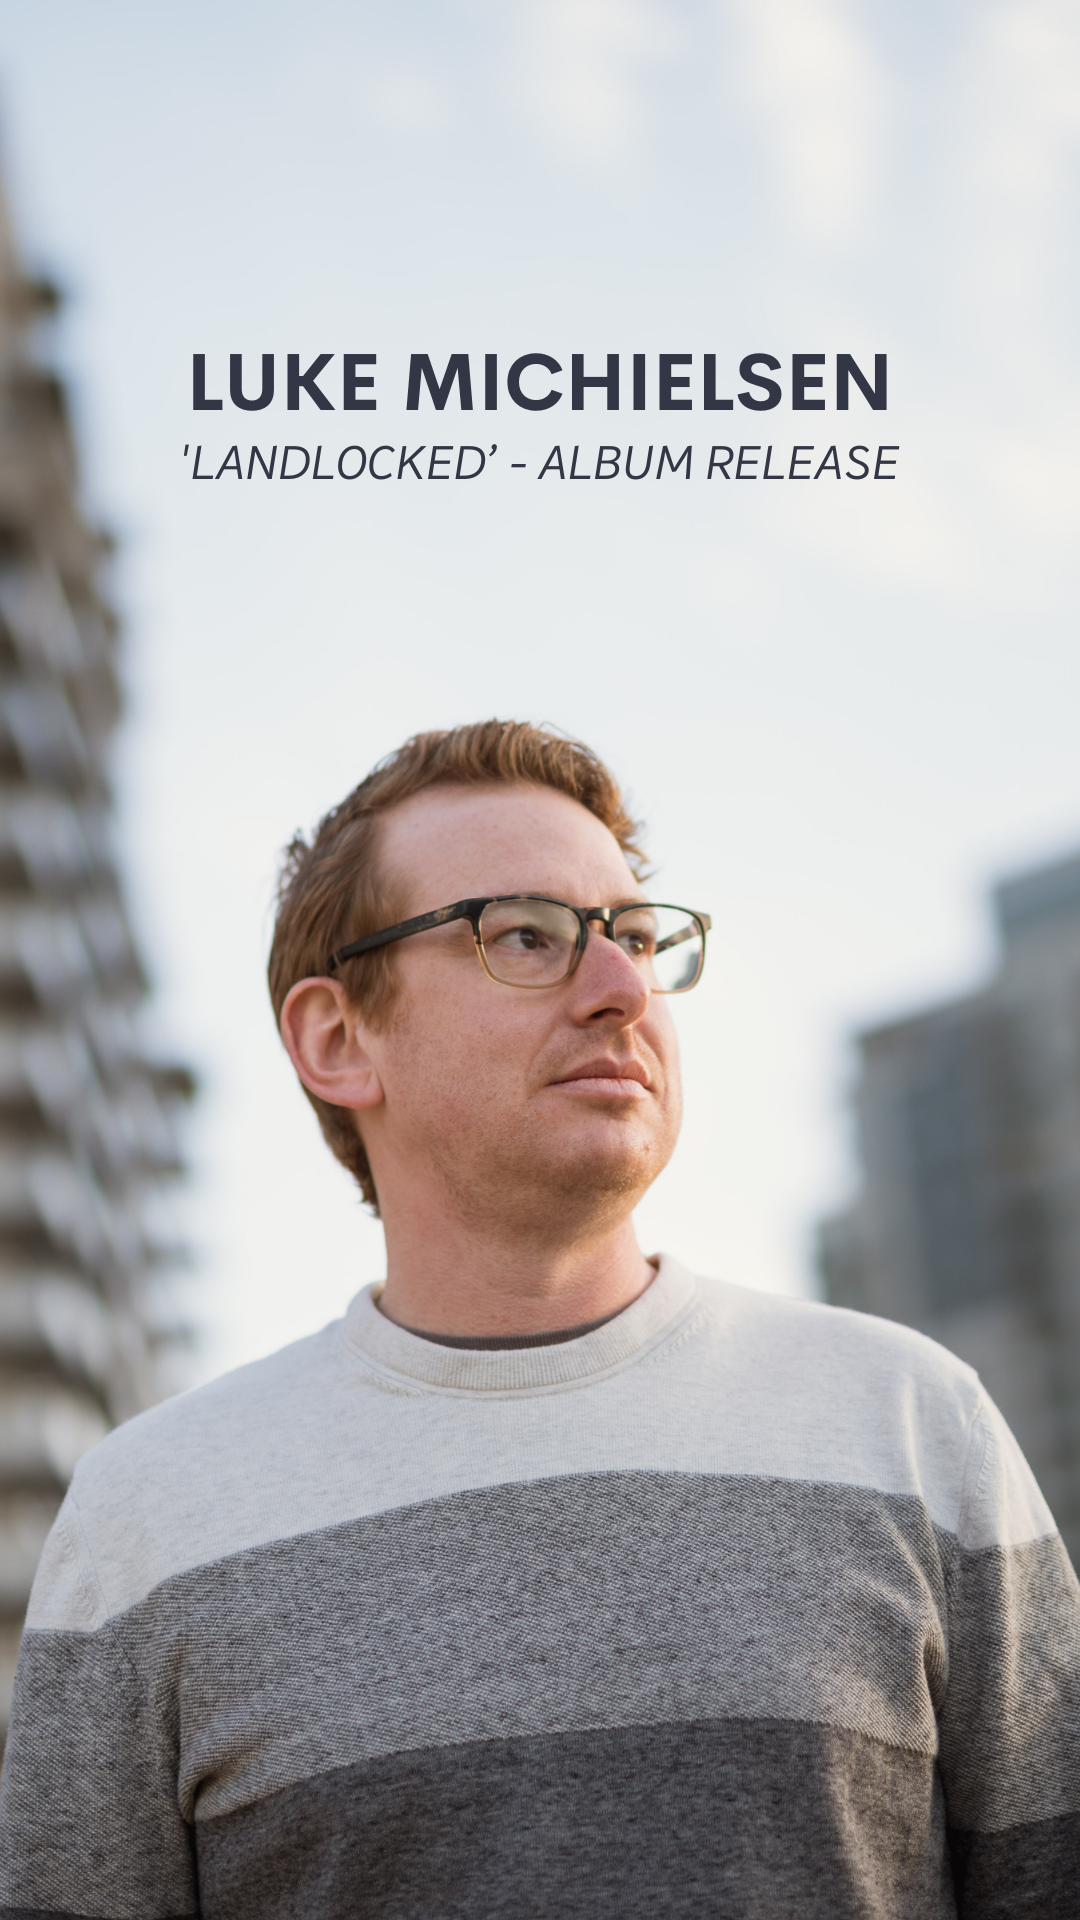 Album Release Preview: Luke Michielsen - Landlocked